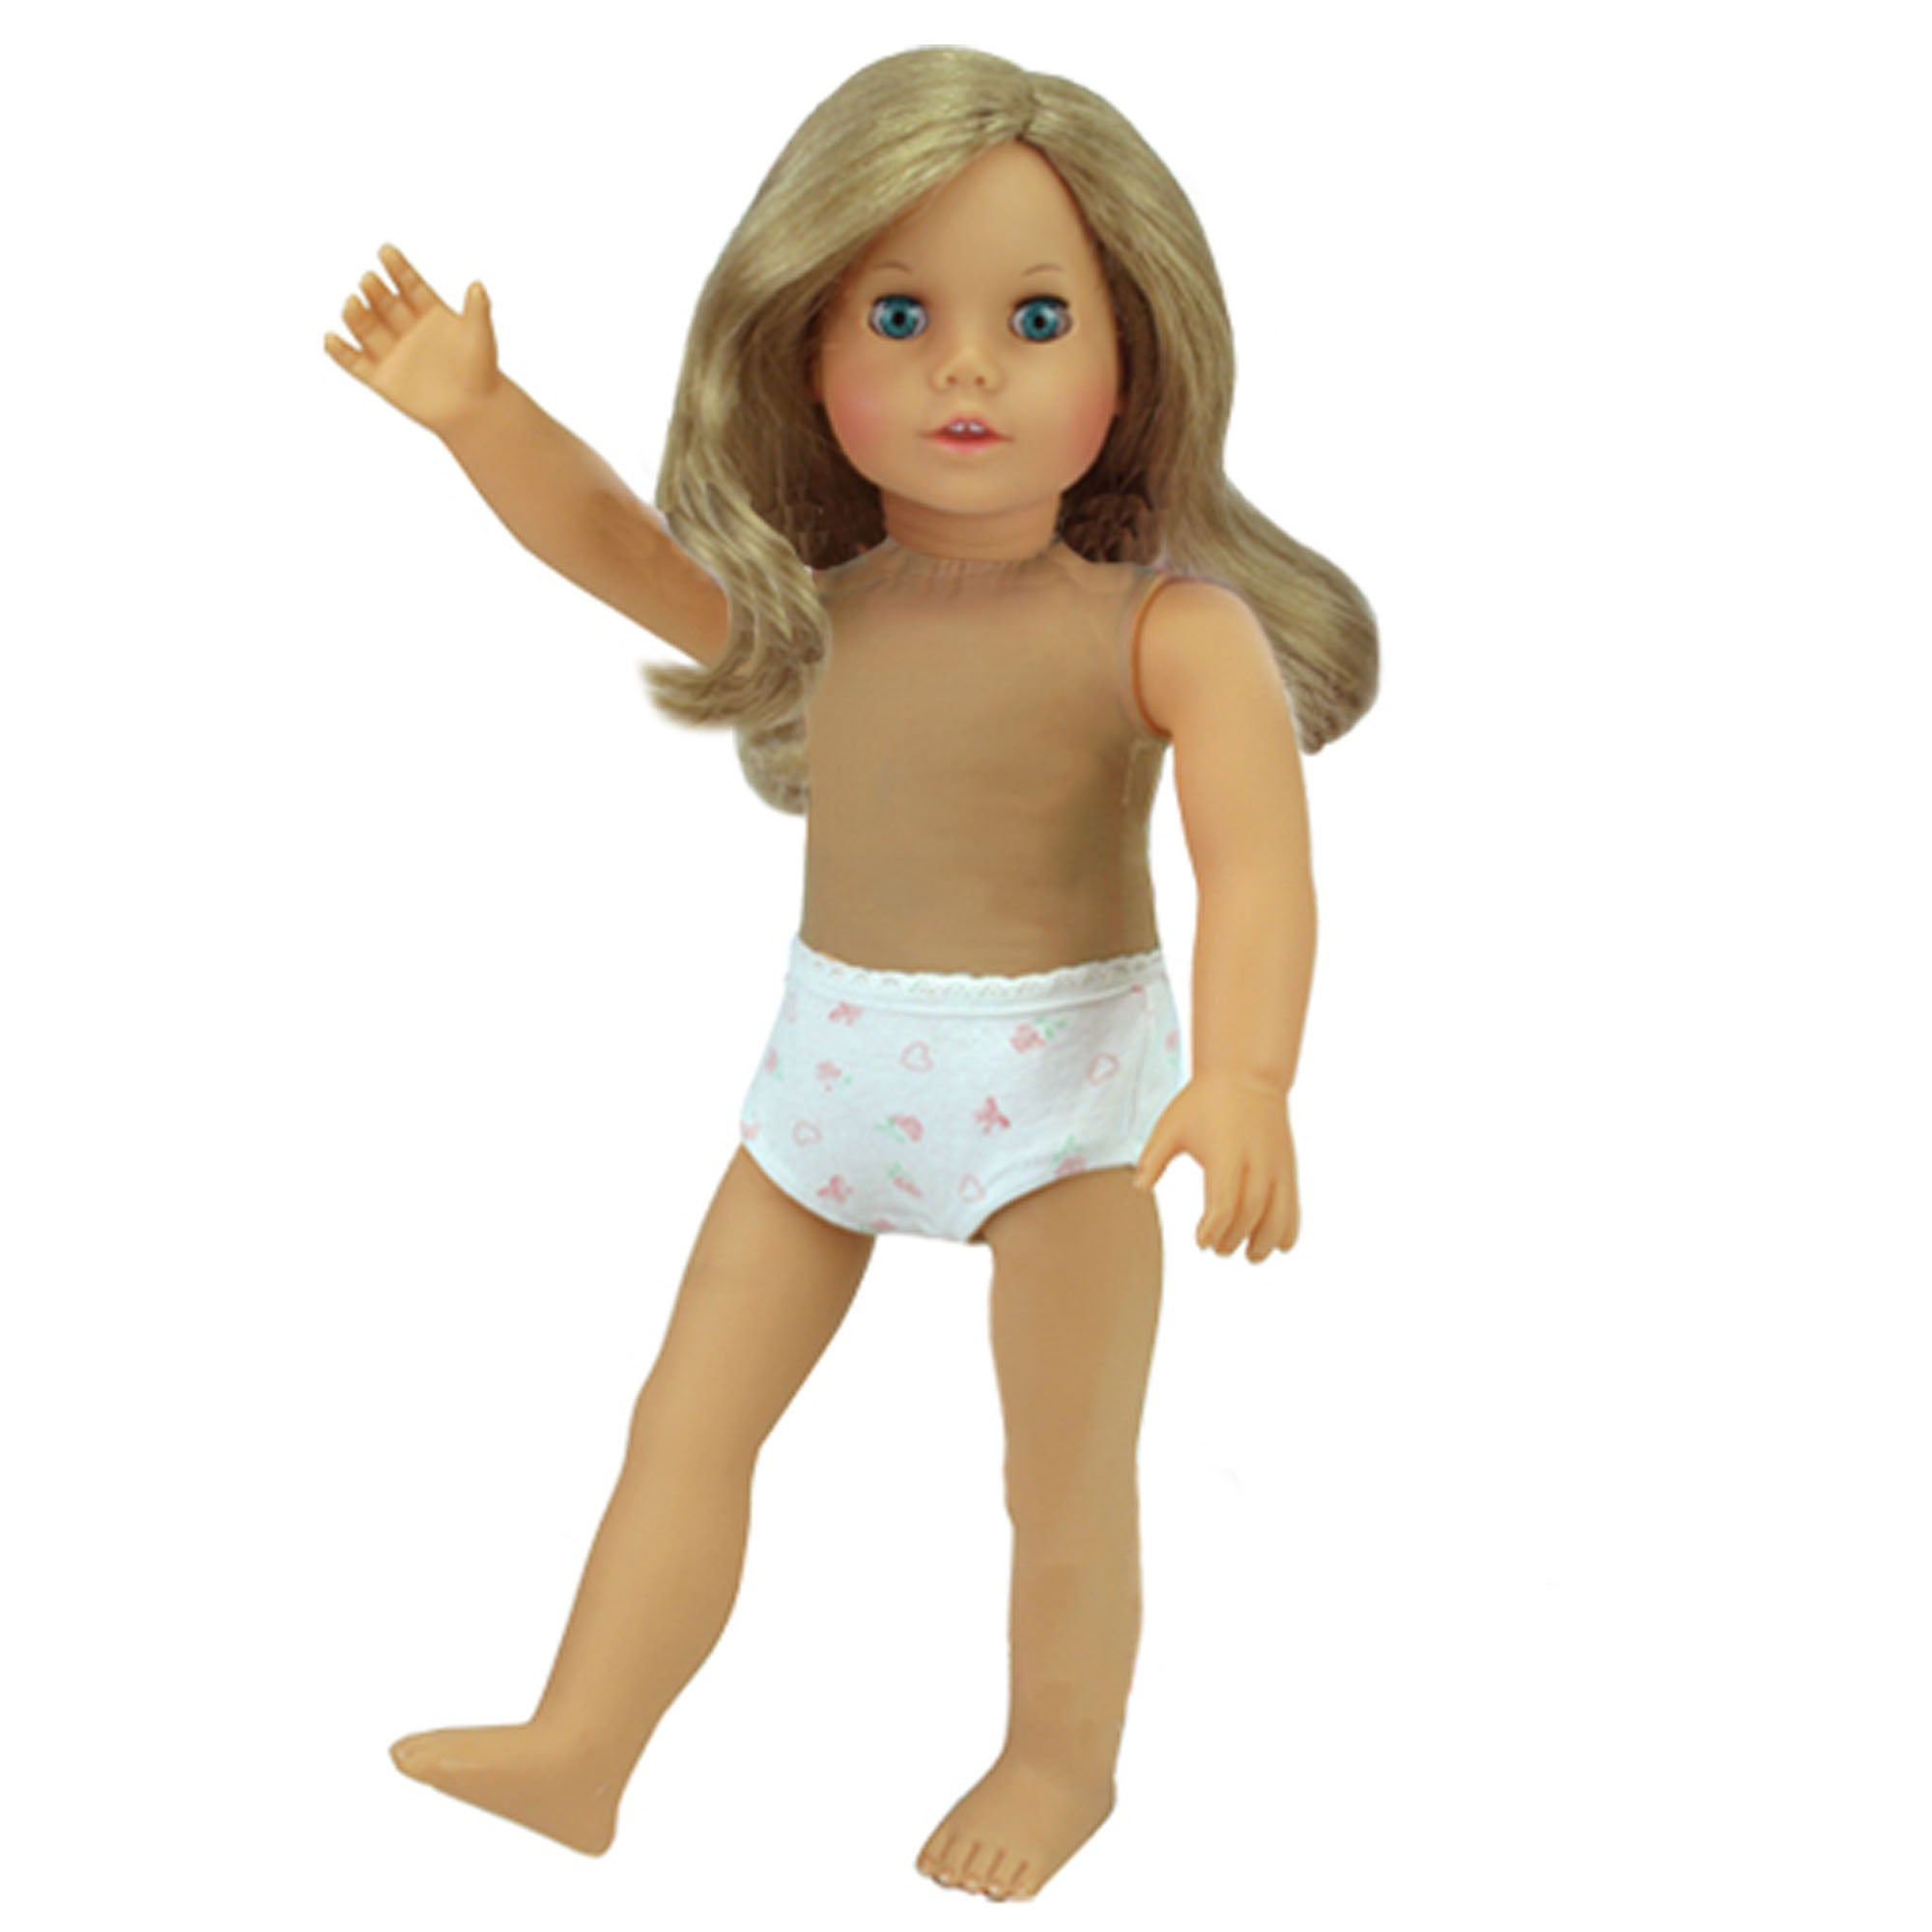 Sophia's Undressed Posable 18'' Soft Bodied Vinyl Doll "Sophia" with Blonde Hair, Blue Eyes, Light Skin Tone